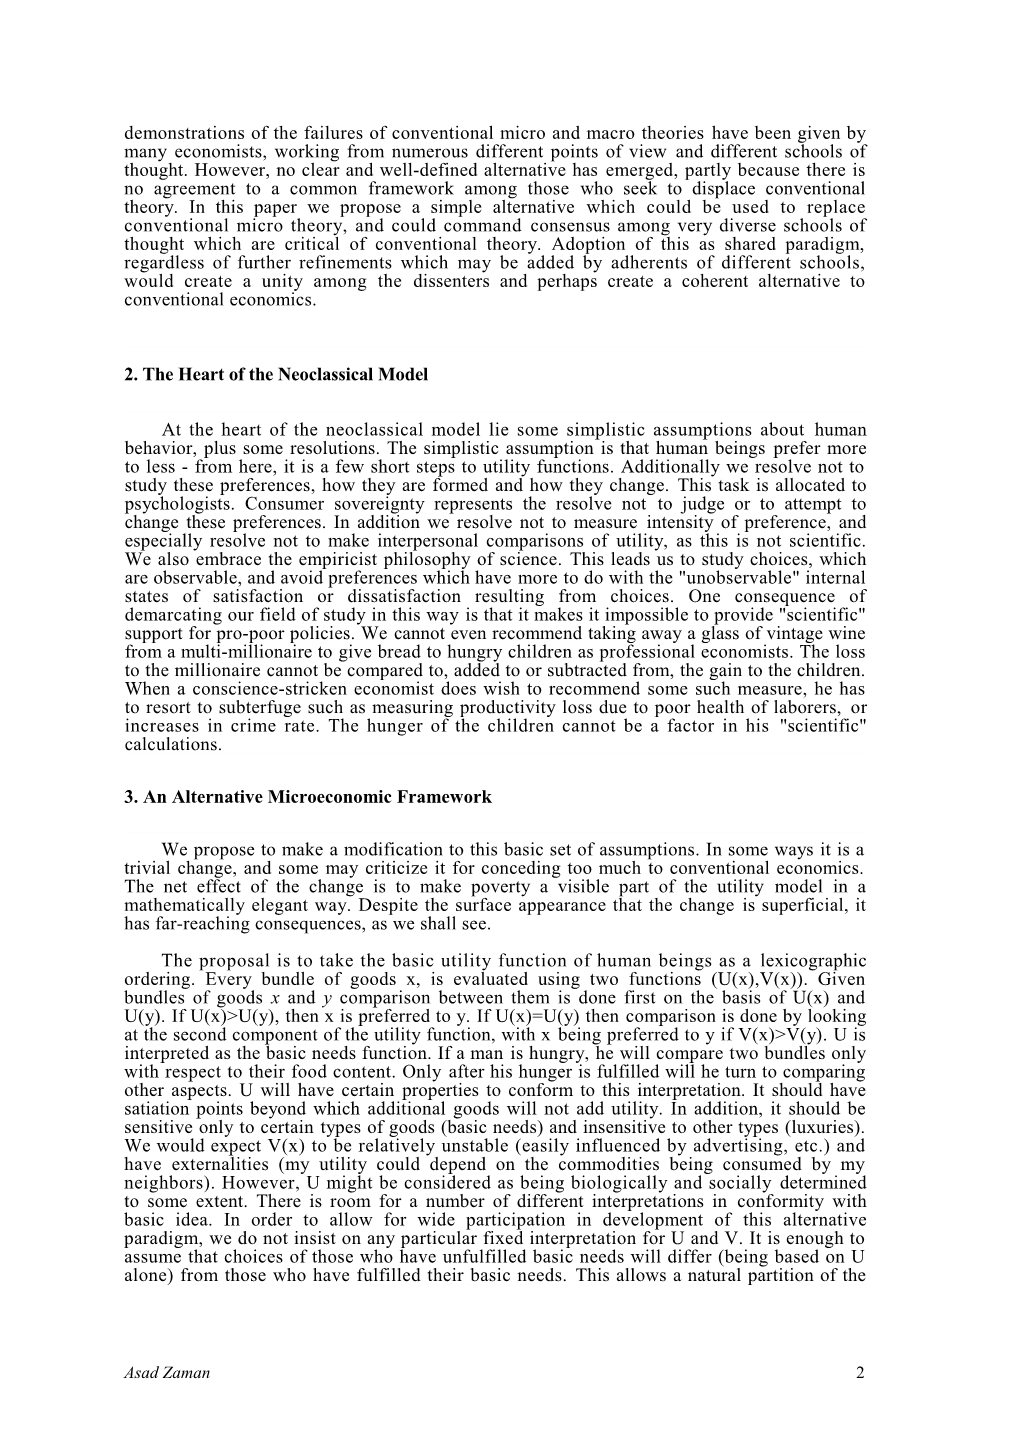 Originally Published In: Journal of King Abdulaziz University: Islamic Econ